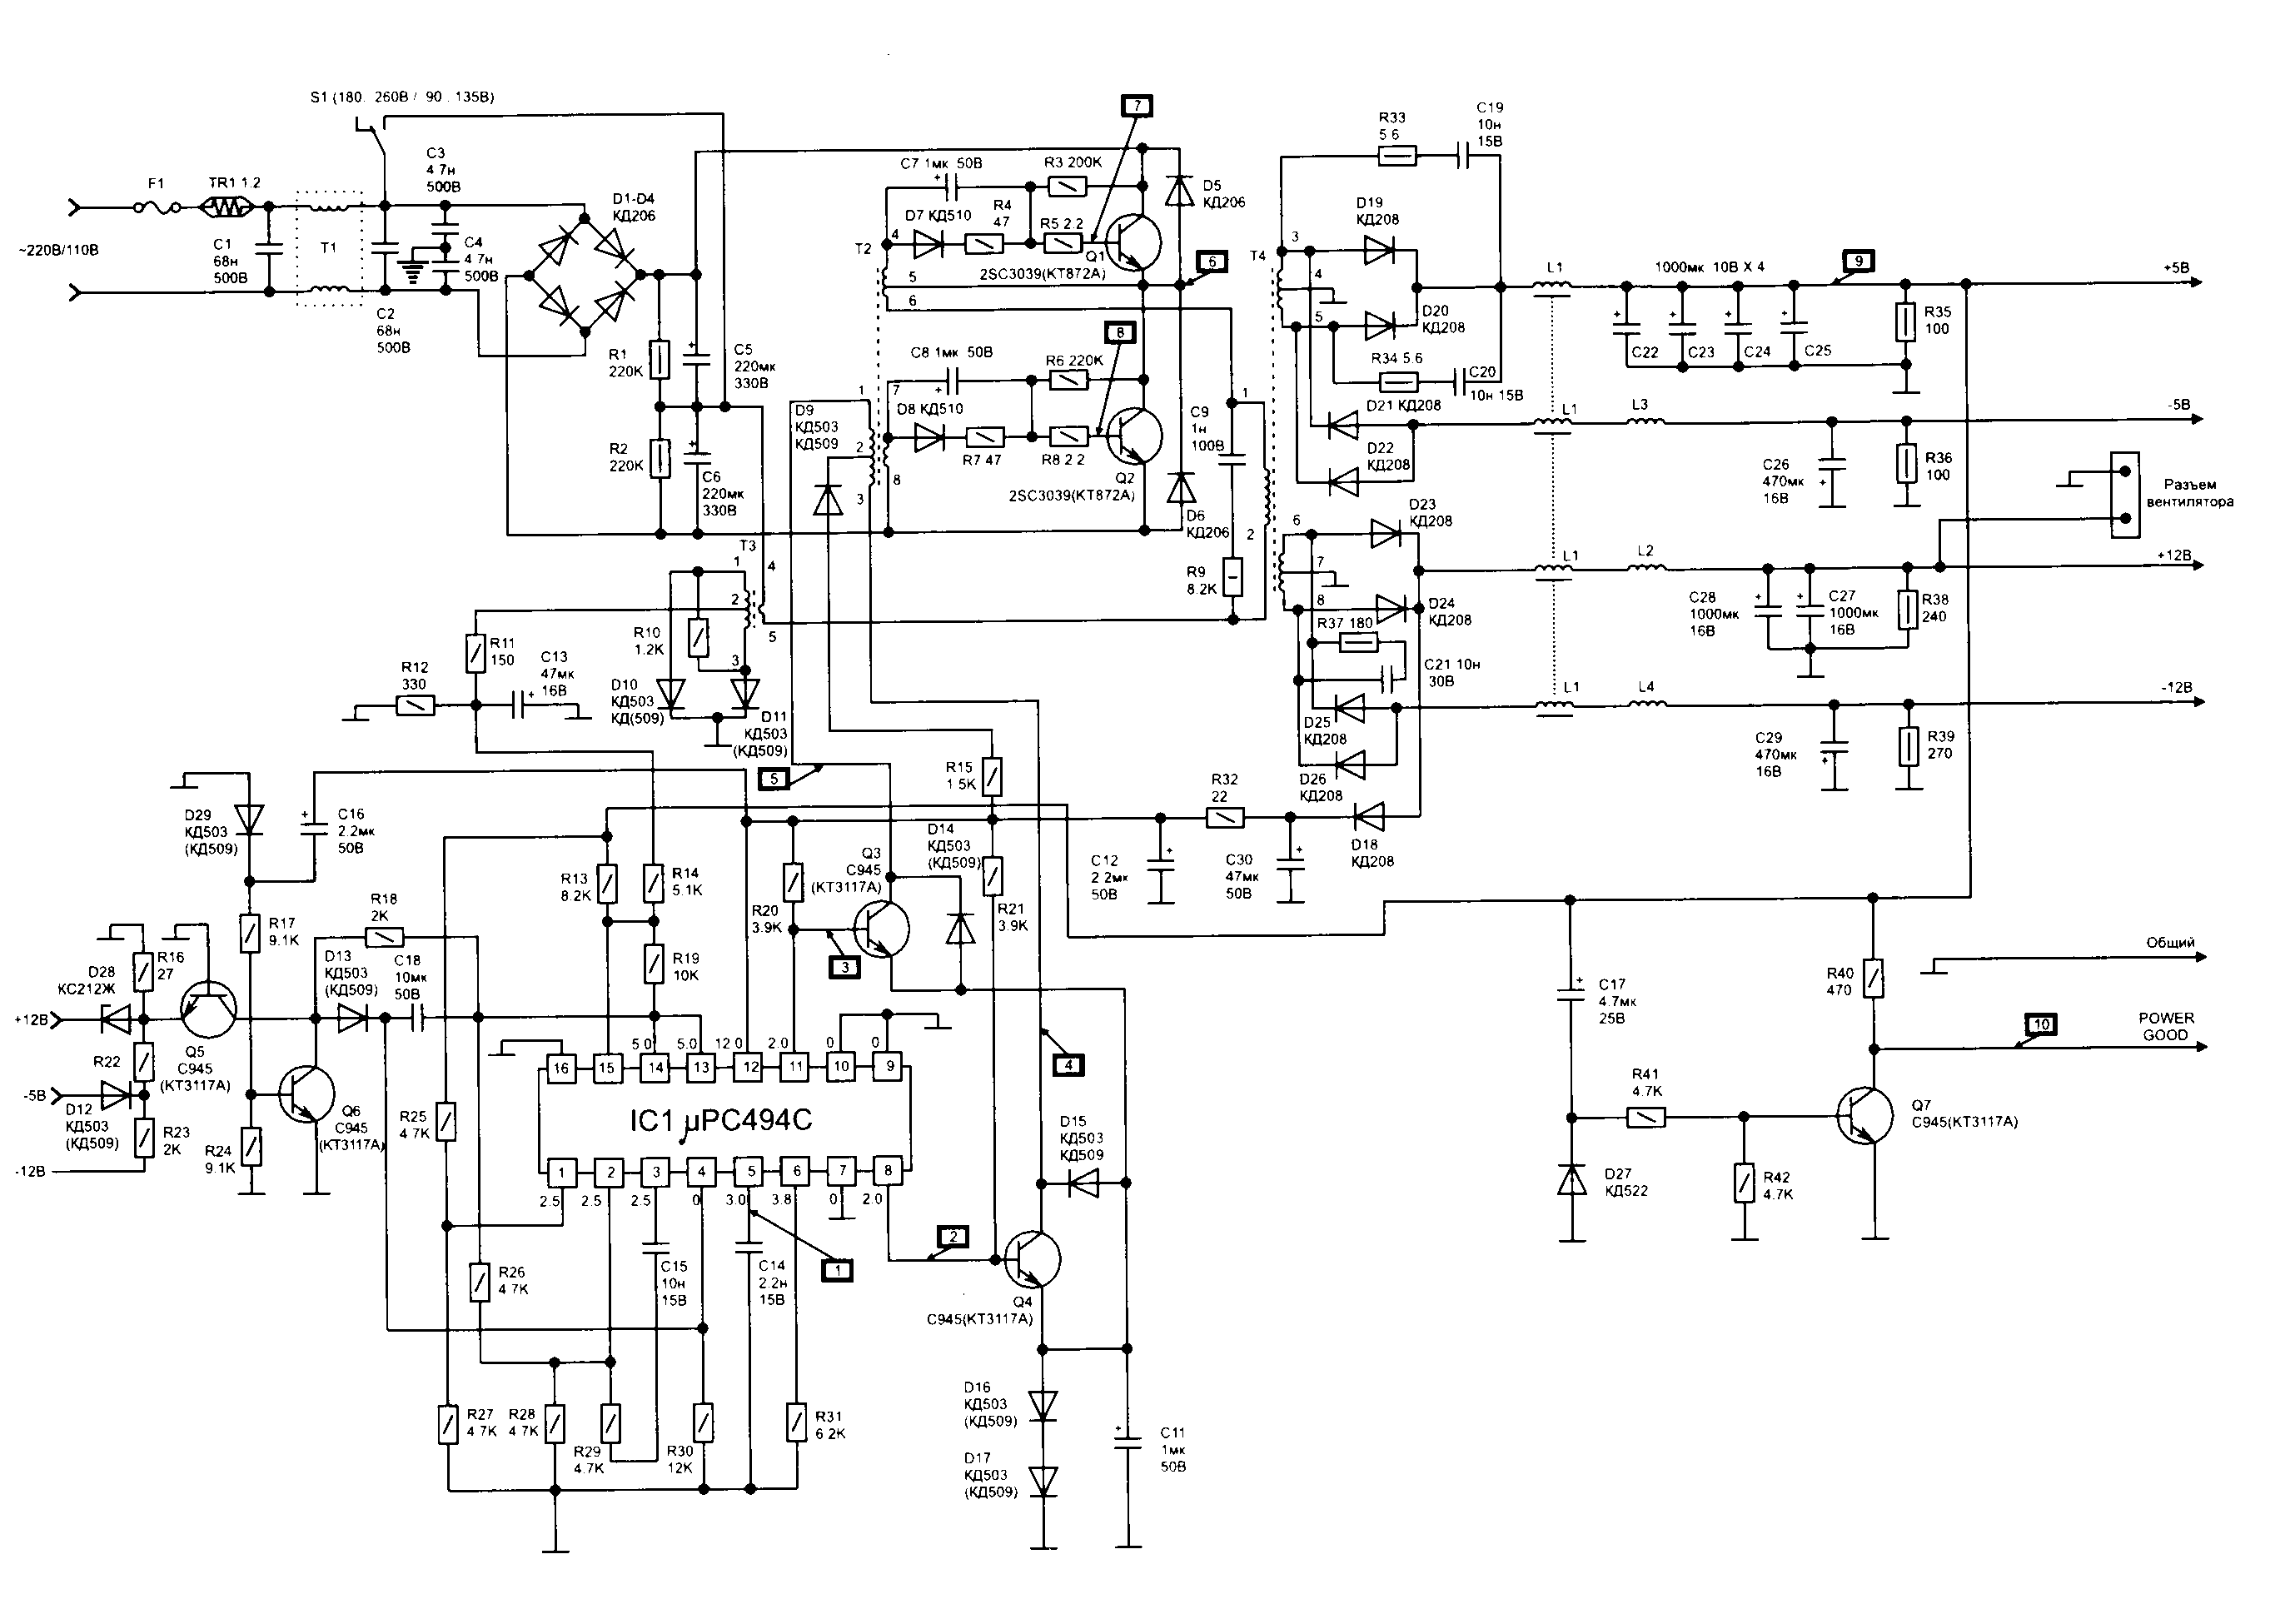 hipro power supply wiring diagram